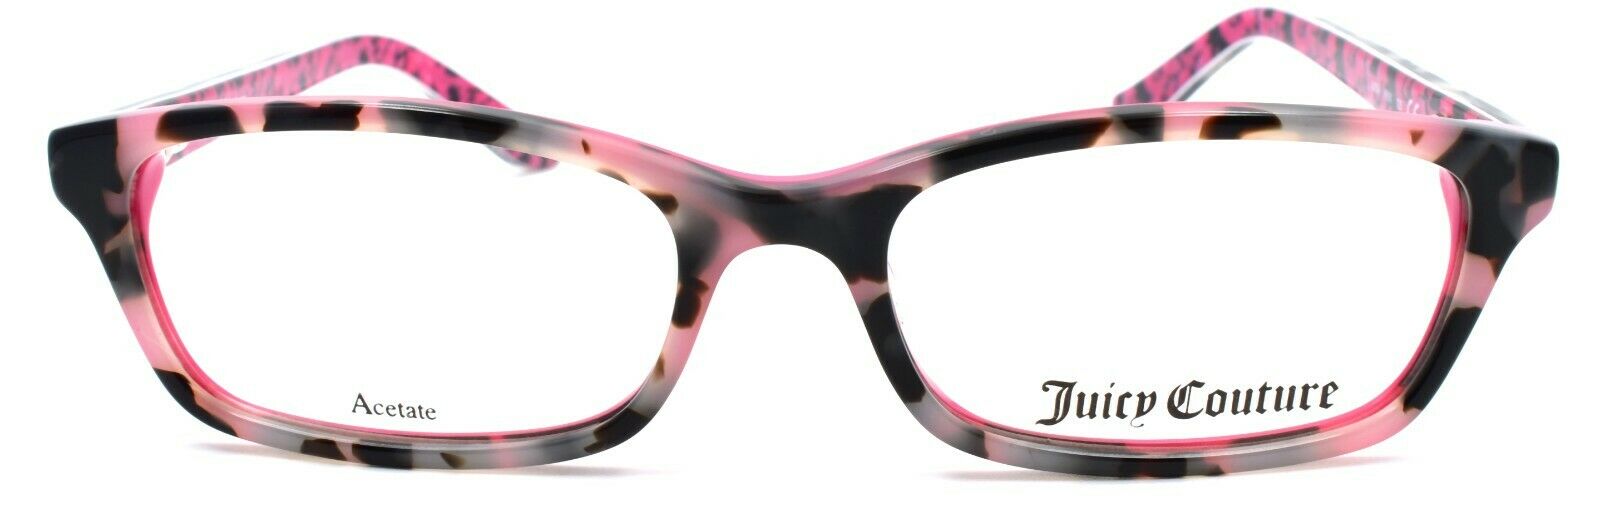 2-Juicy Couture JU924 RVX Girls Eyeglasses Frames 46-15-125 Havana Pink-716737836729-IKSpecs